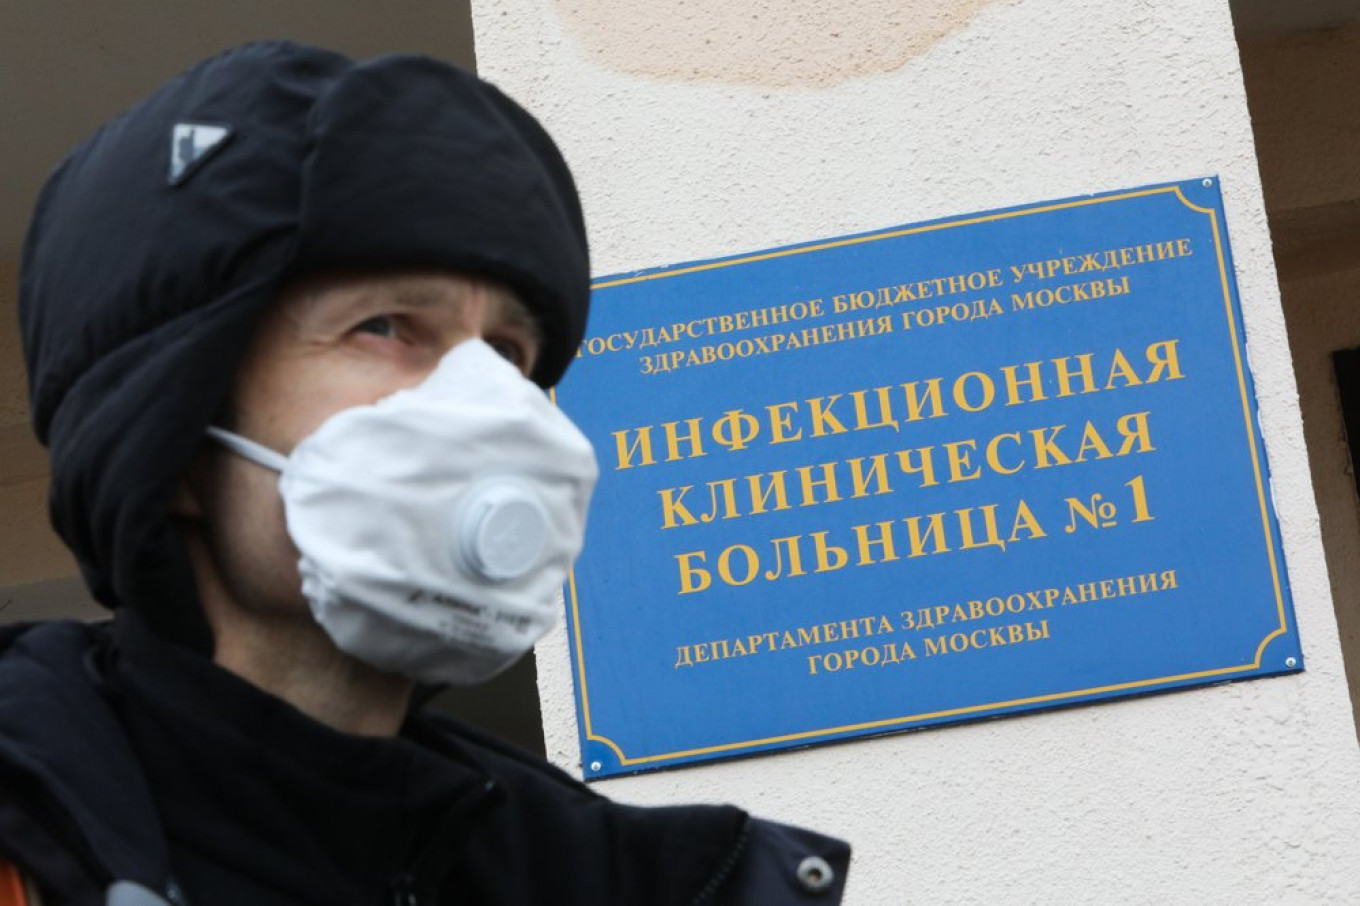 Coronavirus in Russia: The Latest News | March 9